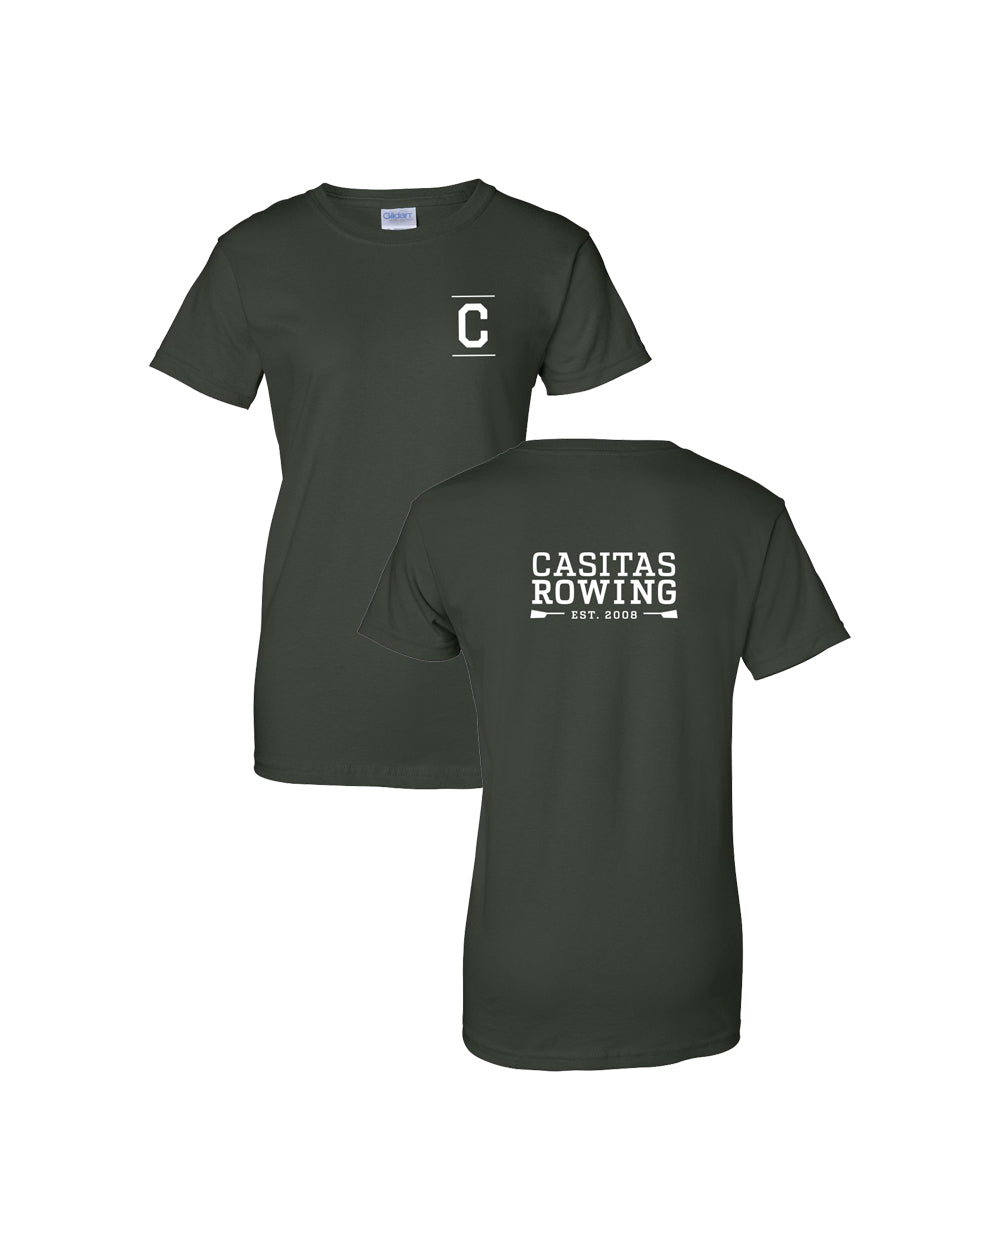 100% Cotton Casitas Rowing Women's Team Spirit T-Shirt